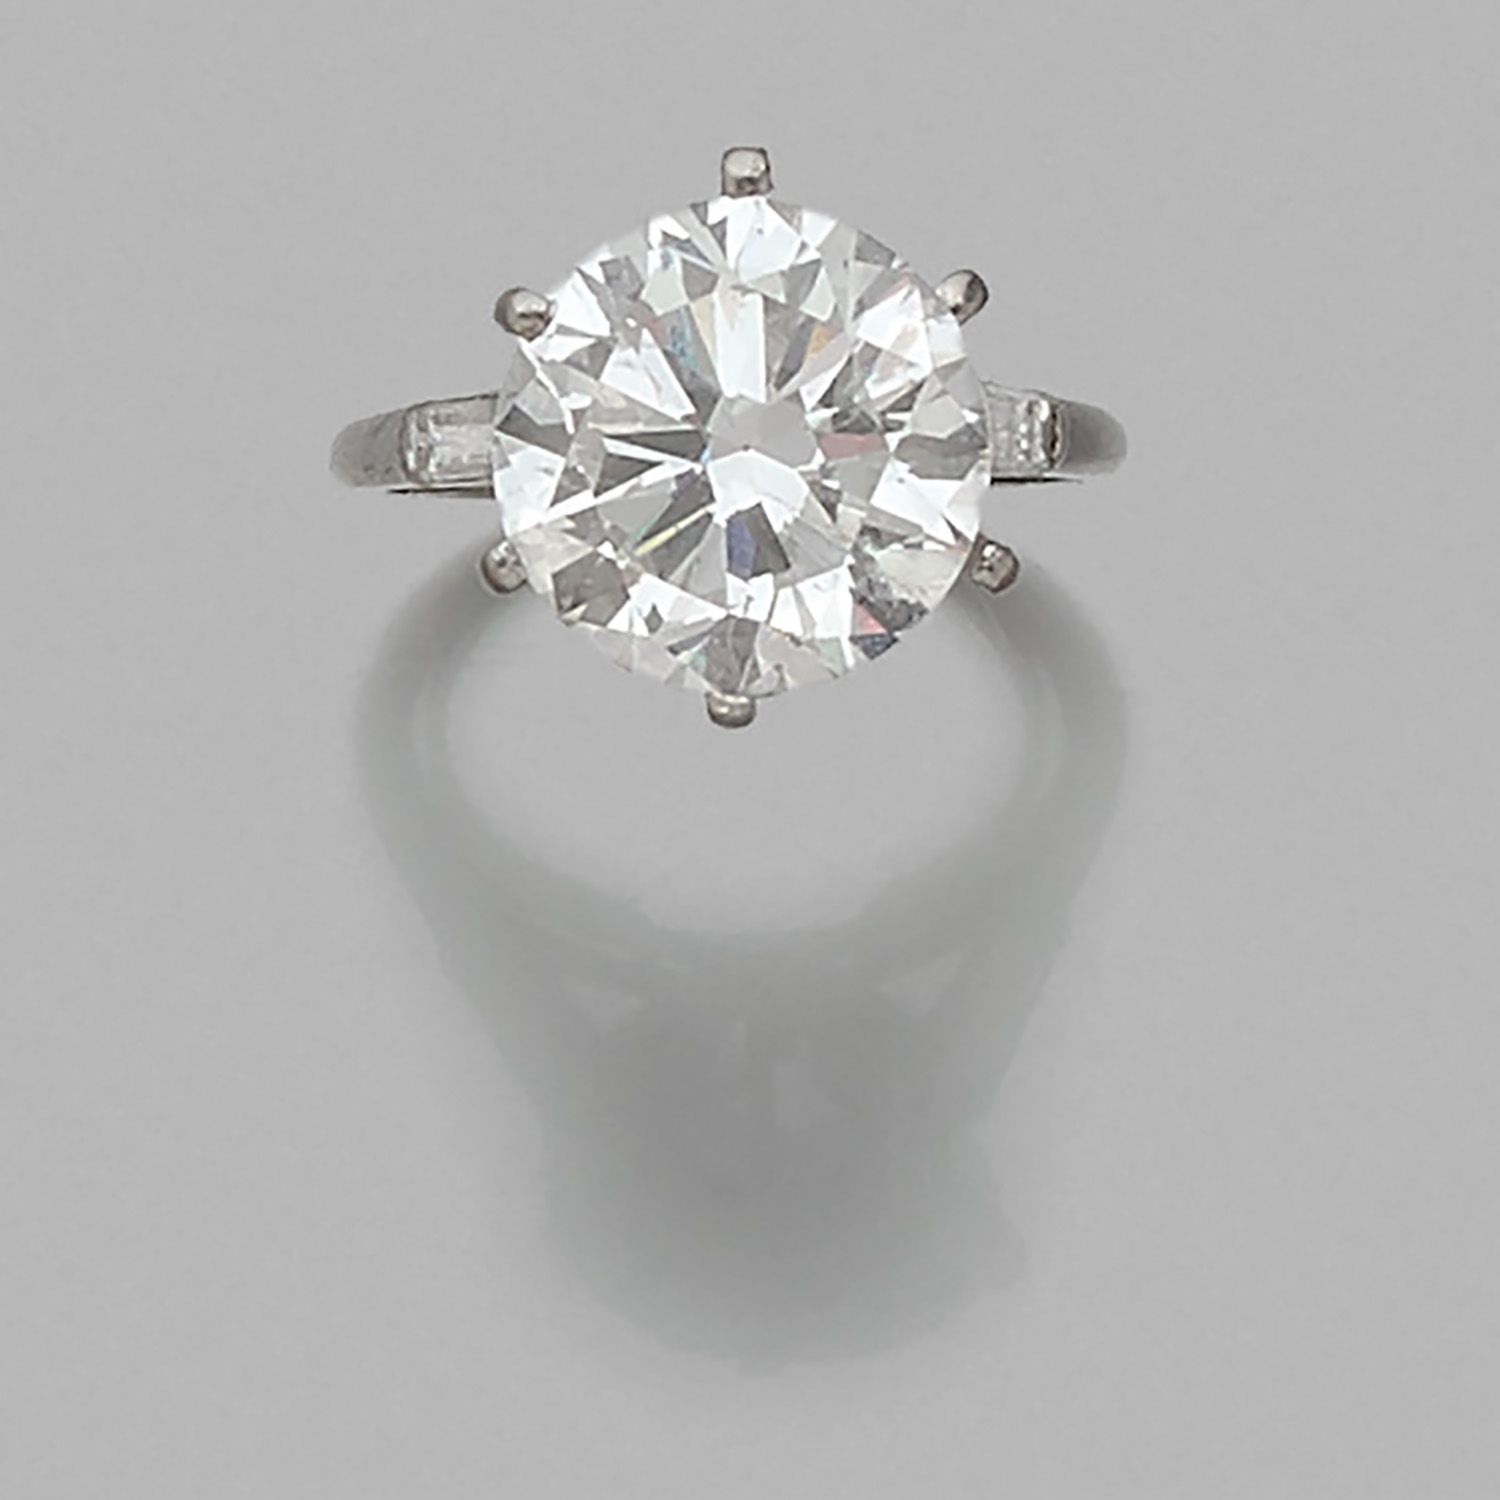 Null 法国的工作

单颗钻石戒指5.47克拉

戒指上镶嵌着一颗爪形切割的钻石，并以两颗长方形钻石为框架。这枚戒指是用铂金镶嵌的。

毛重：5.24克。

&hellip;